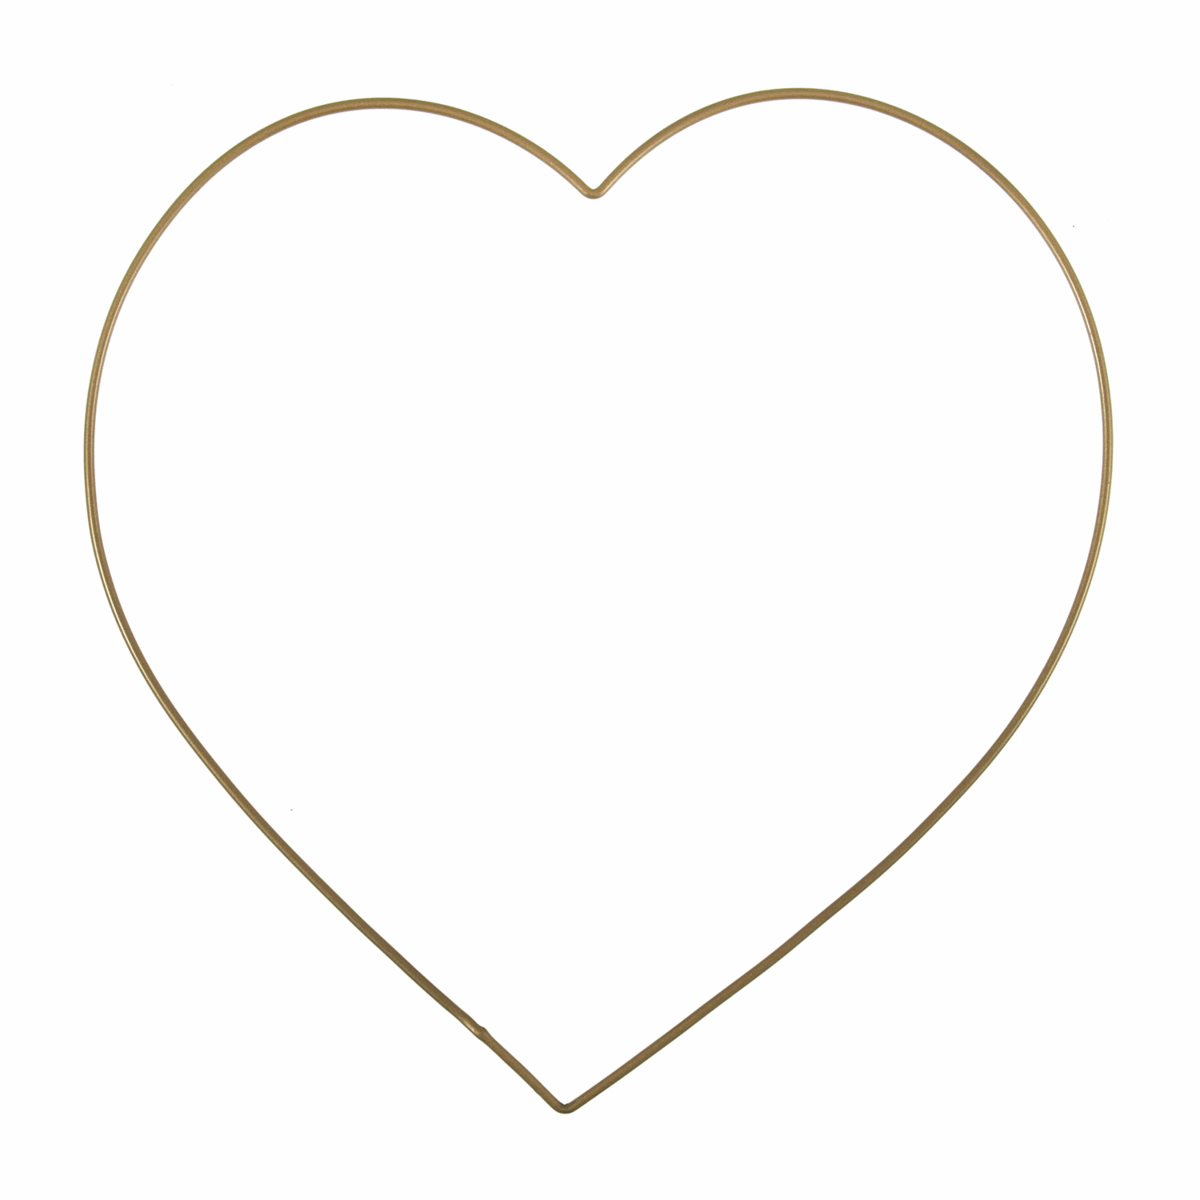 Trimits Gold Metal Heart Craft Hoop - 20cm